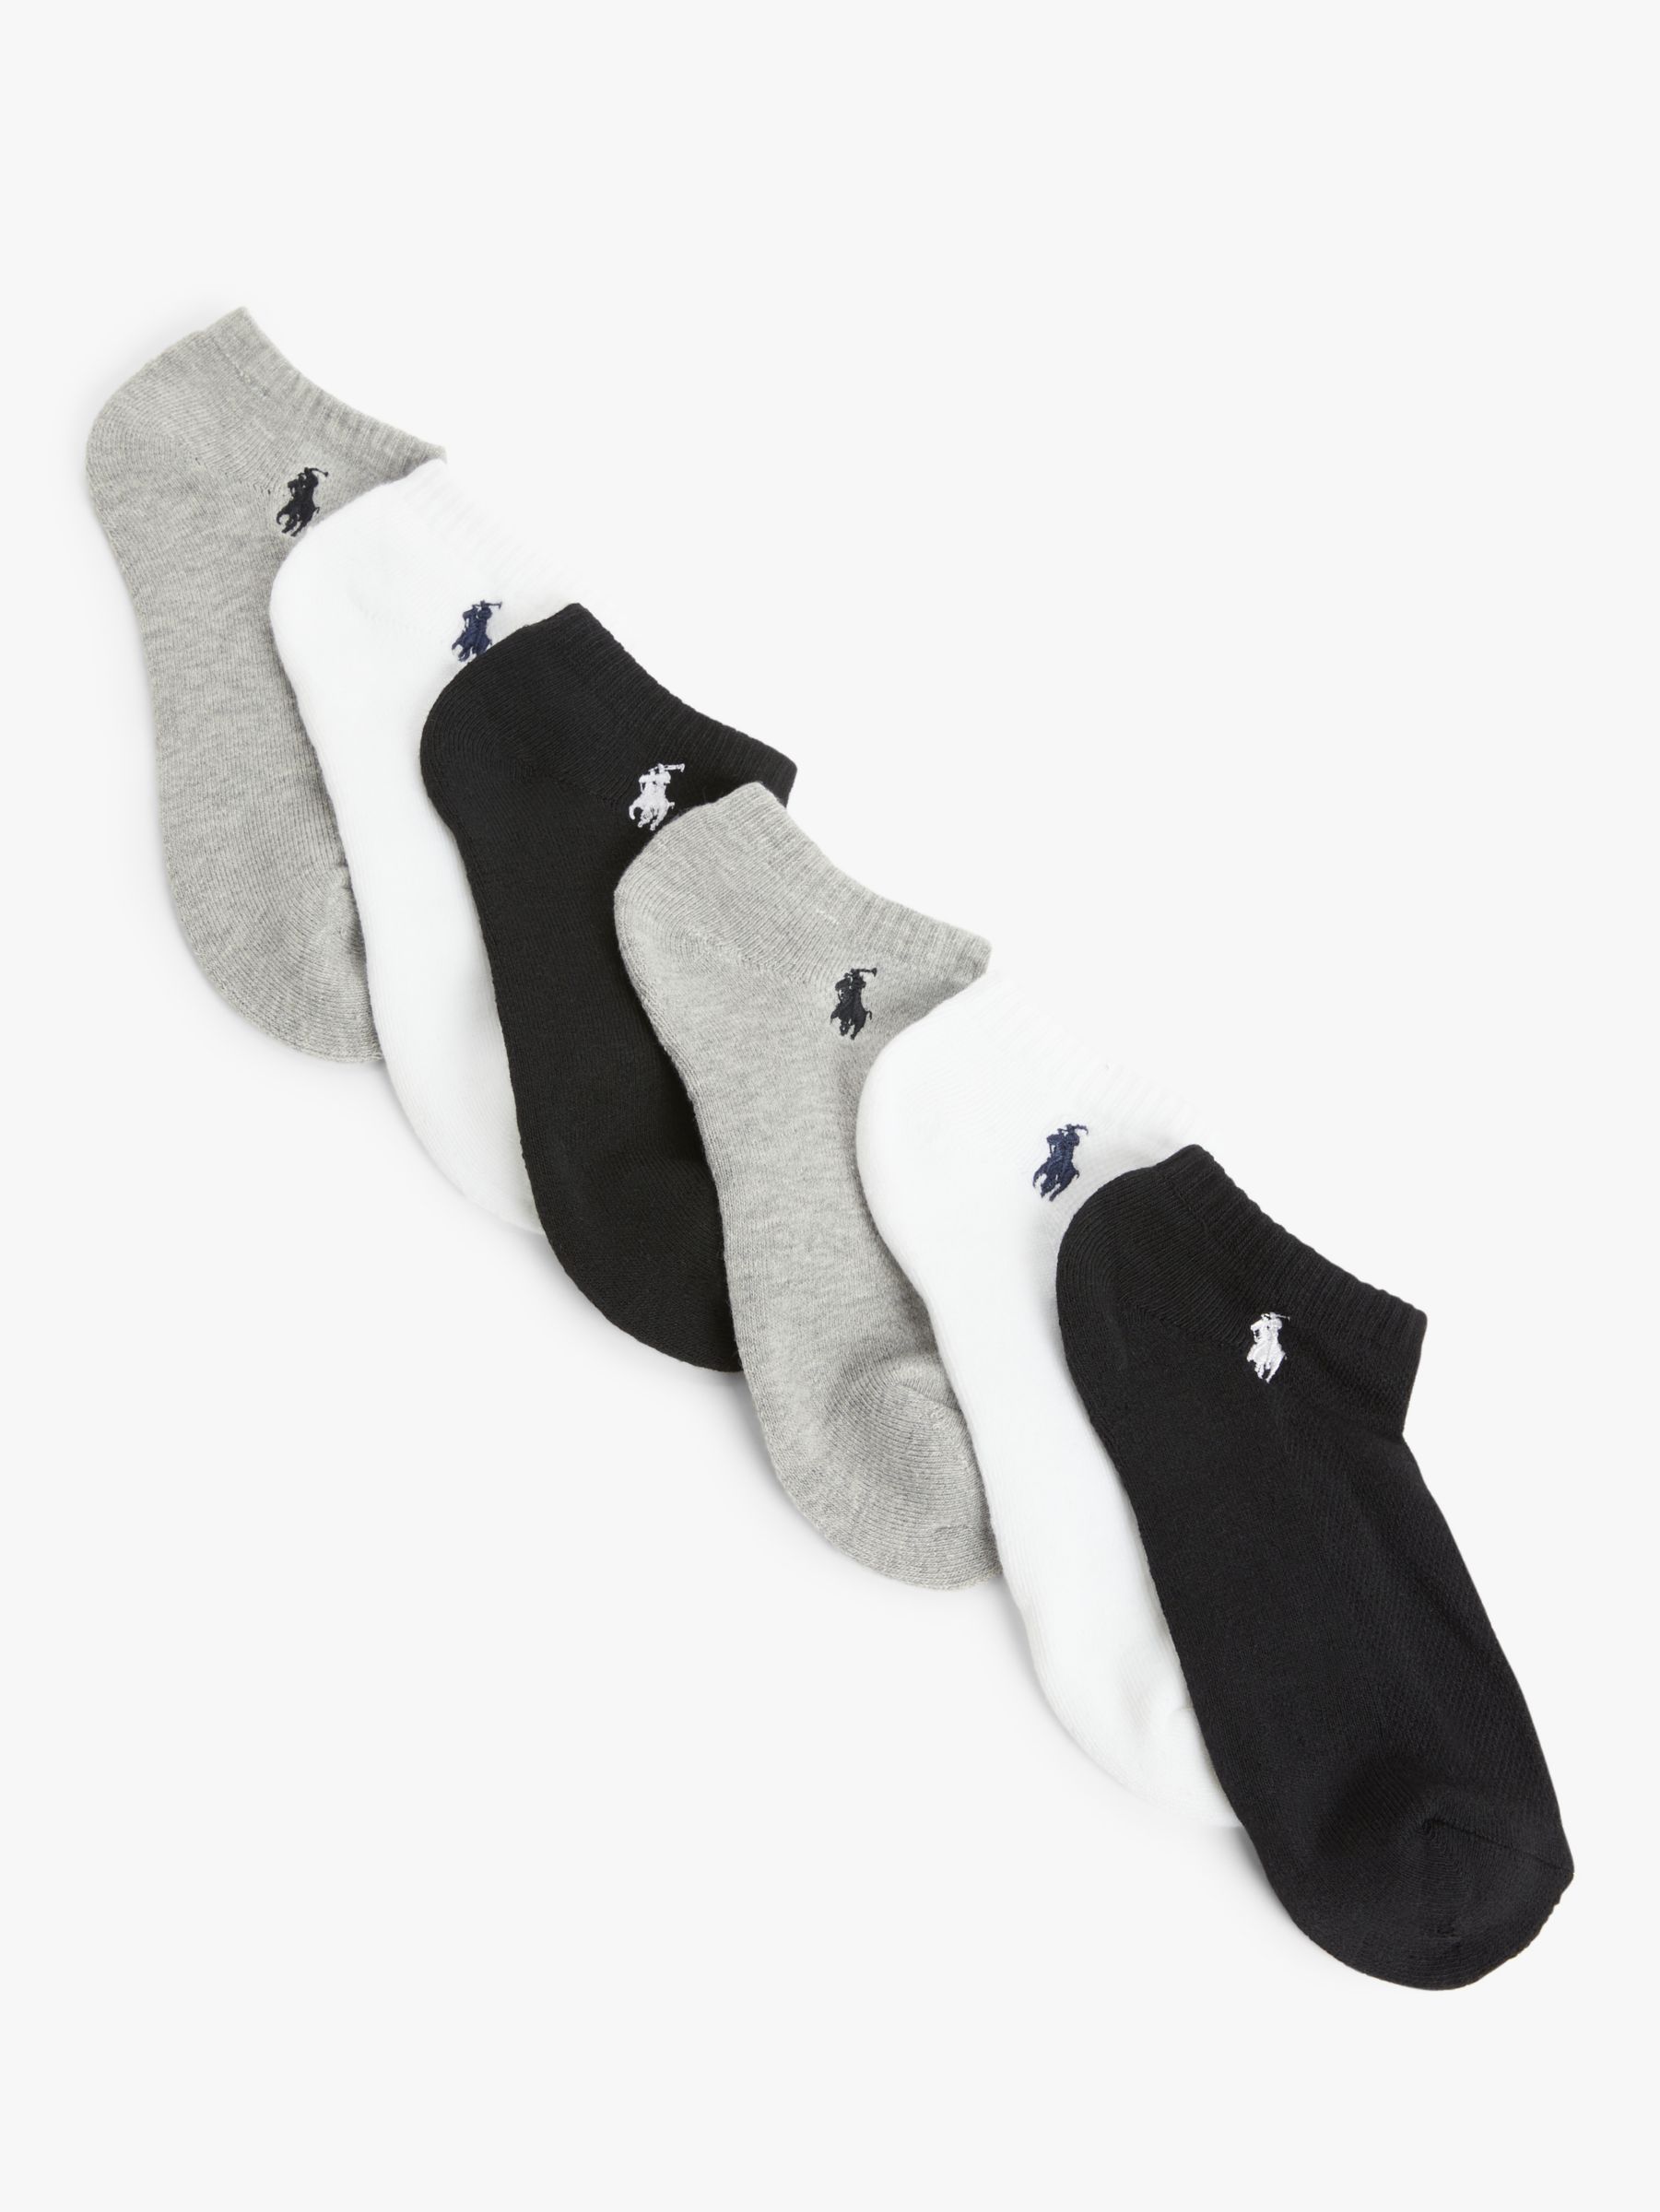 Polo Ralph Lauren Trainer Socks, Pack of 6, Multi at John Lewis & Partners